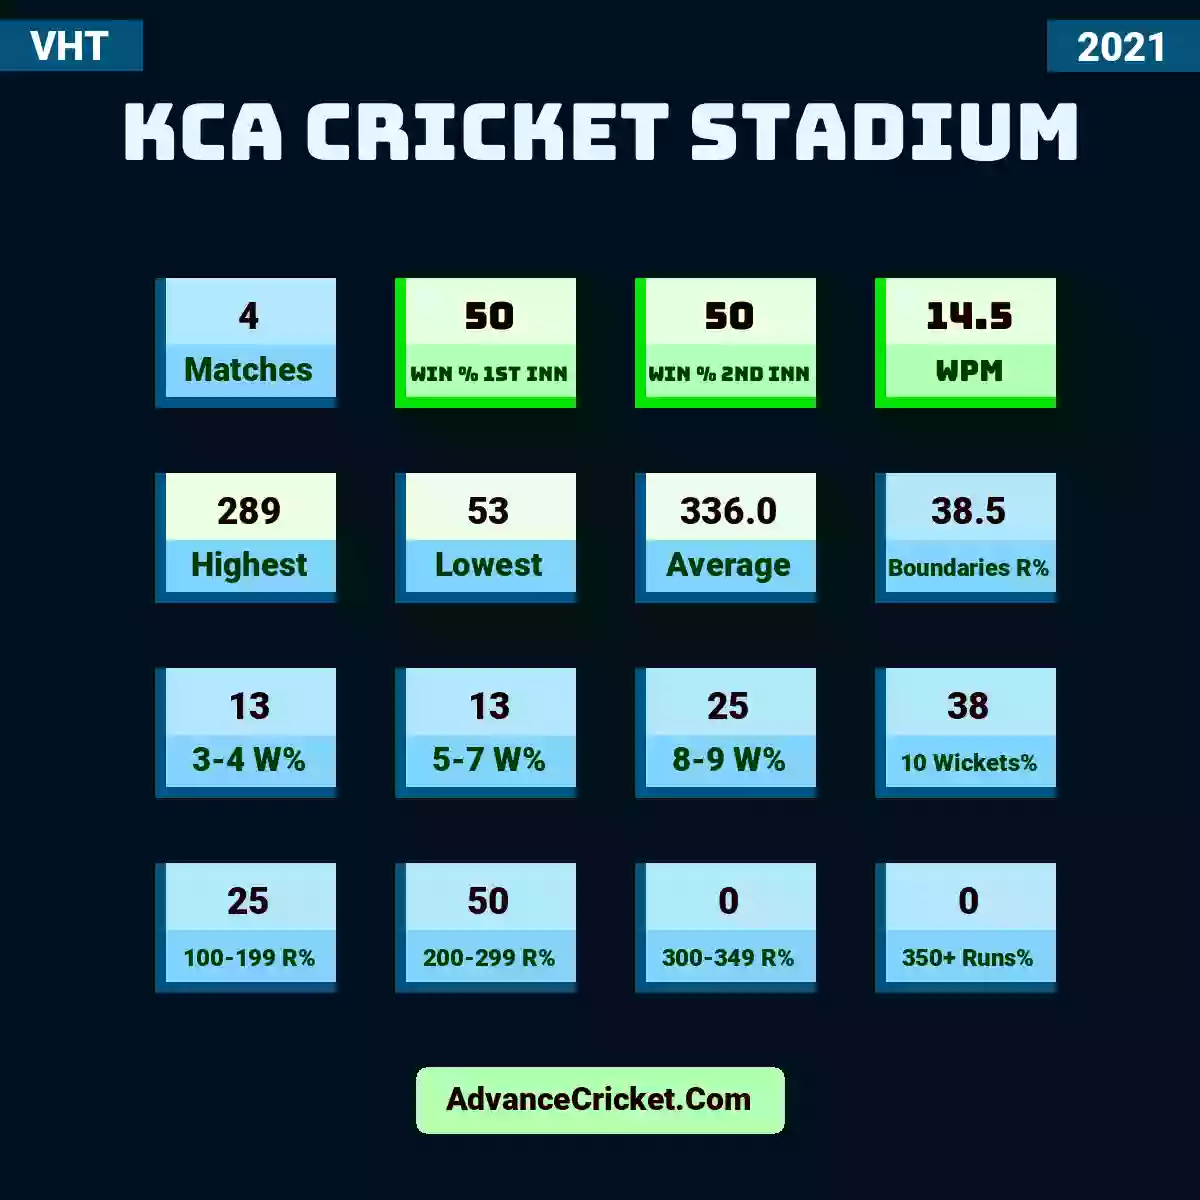 Image showing KCA Cricket Stadium with Matches: 4, Win % 1st Inn: 50, Win % 2nd Inn: 50, WPM: 14.5, Highest: 289, Lowest: 53, Average: 336.0, Boundaries R%: 38.5, 3-4 W%: 13, 5-7 W%: 13, 8-9 W%: 25, 10 Wickets%: 38, 100-199 R%: 25, 200-299 R%: 50, 300-349 R%: 0, 350+ Runs%: 0.